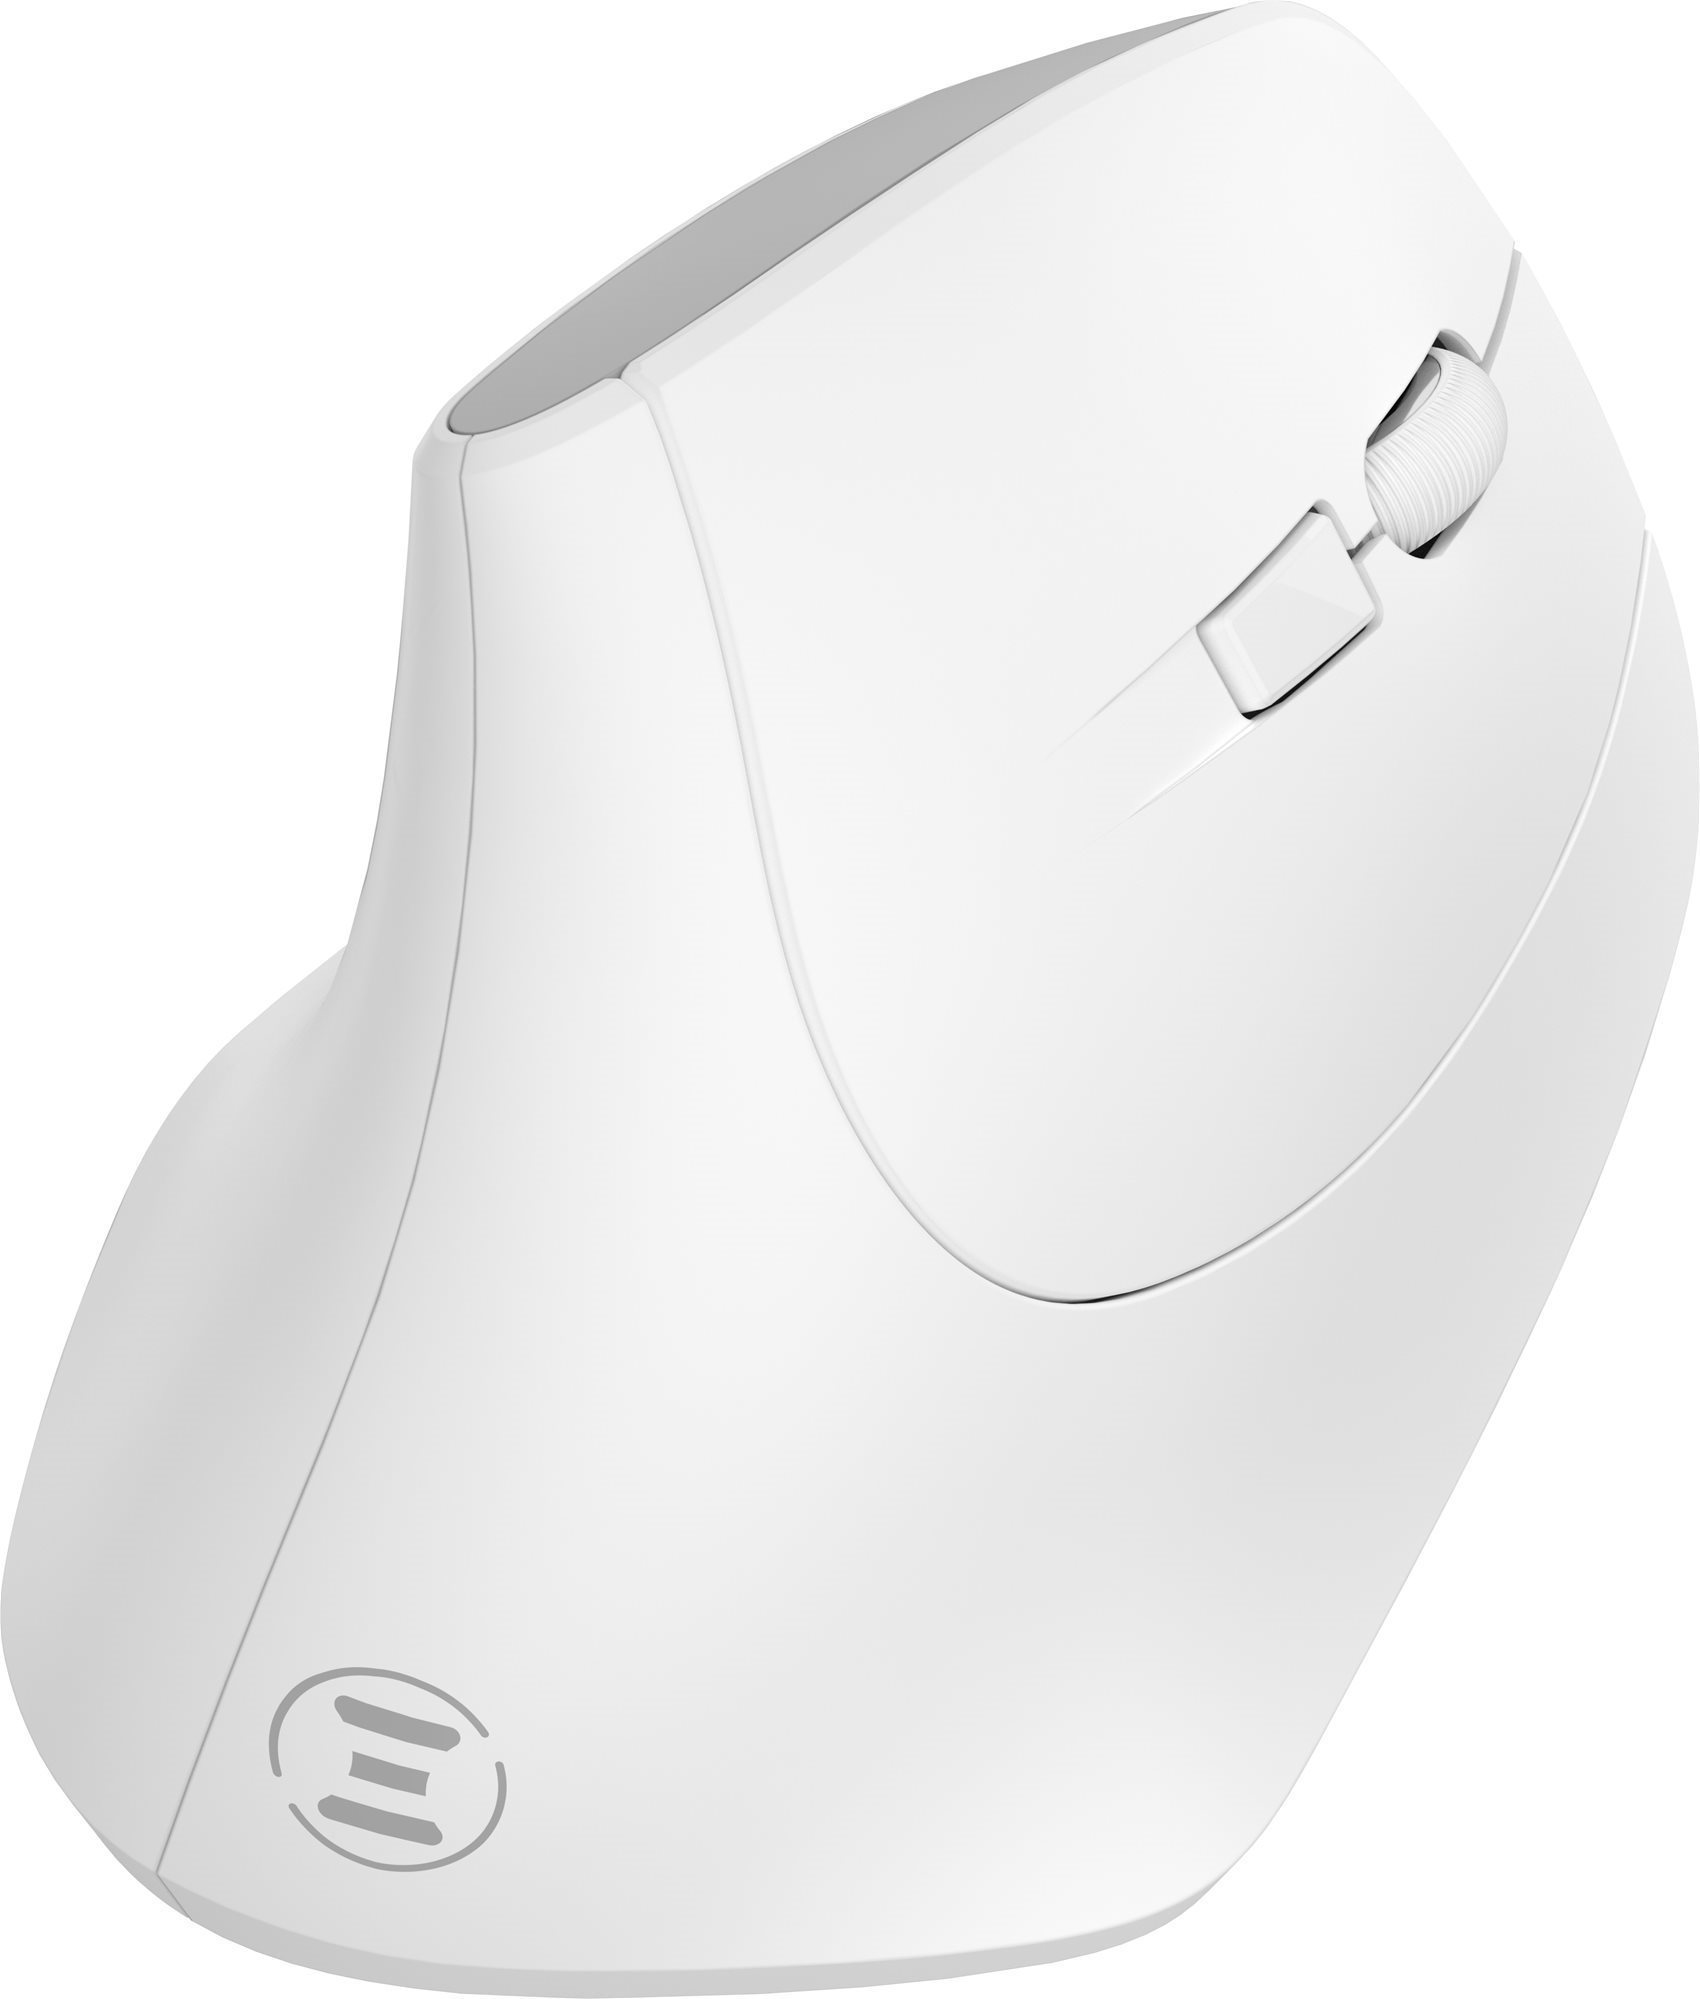 Eternico Wireless 2.4 GHz Vertical Mouse MV300 fehér